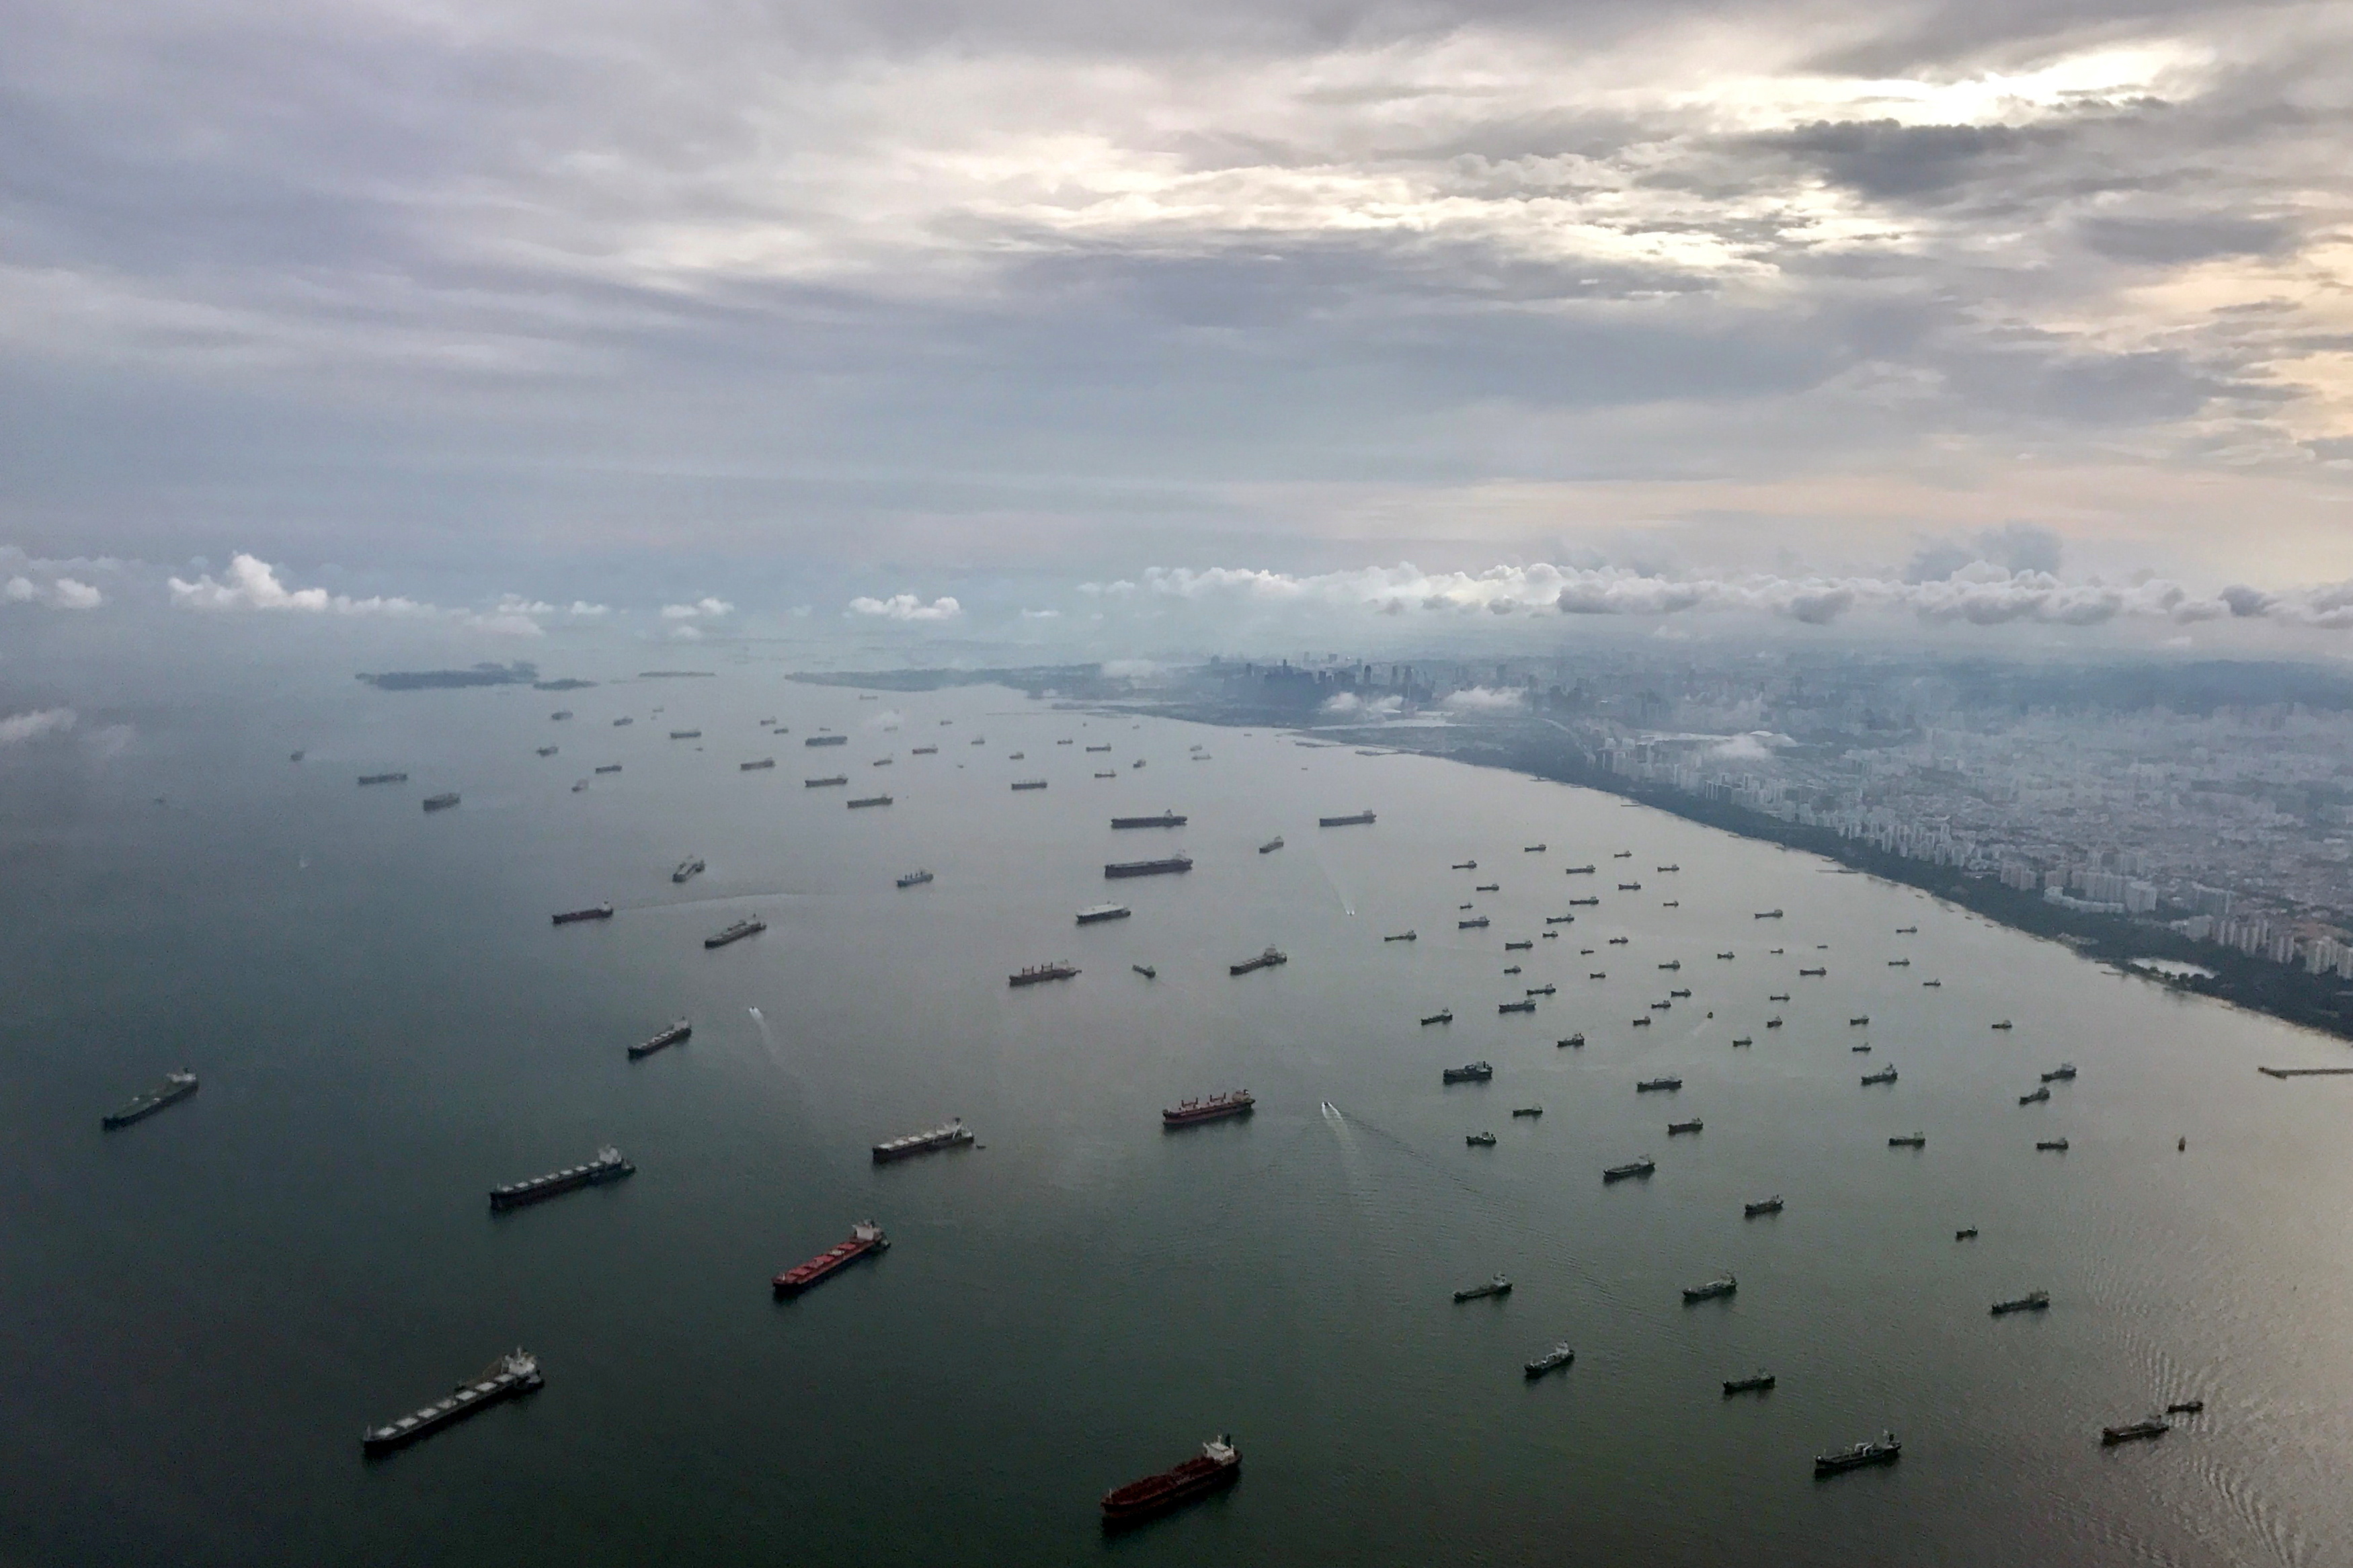 A bird's-eye view of ships along the coast in Singapore